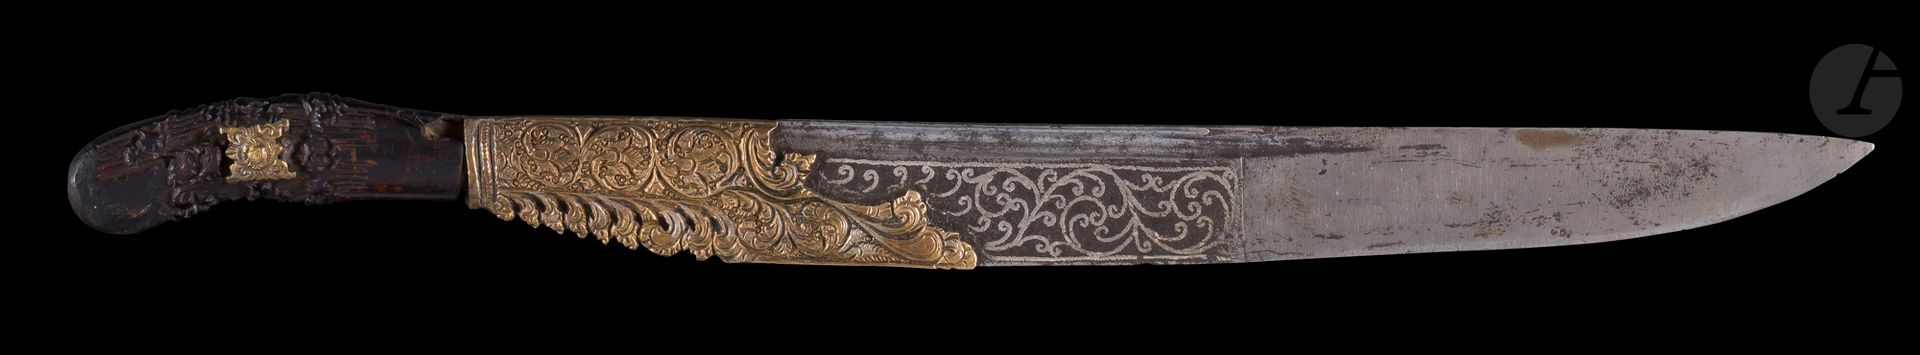 Null Cuchillo de betel Piha kaetta, Sri Lanka, siglo XIX
Hoja ligeramente curvad&hellip;